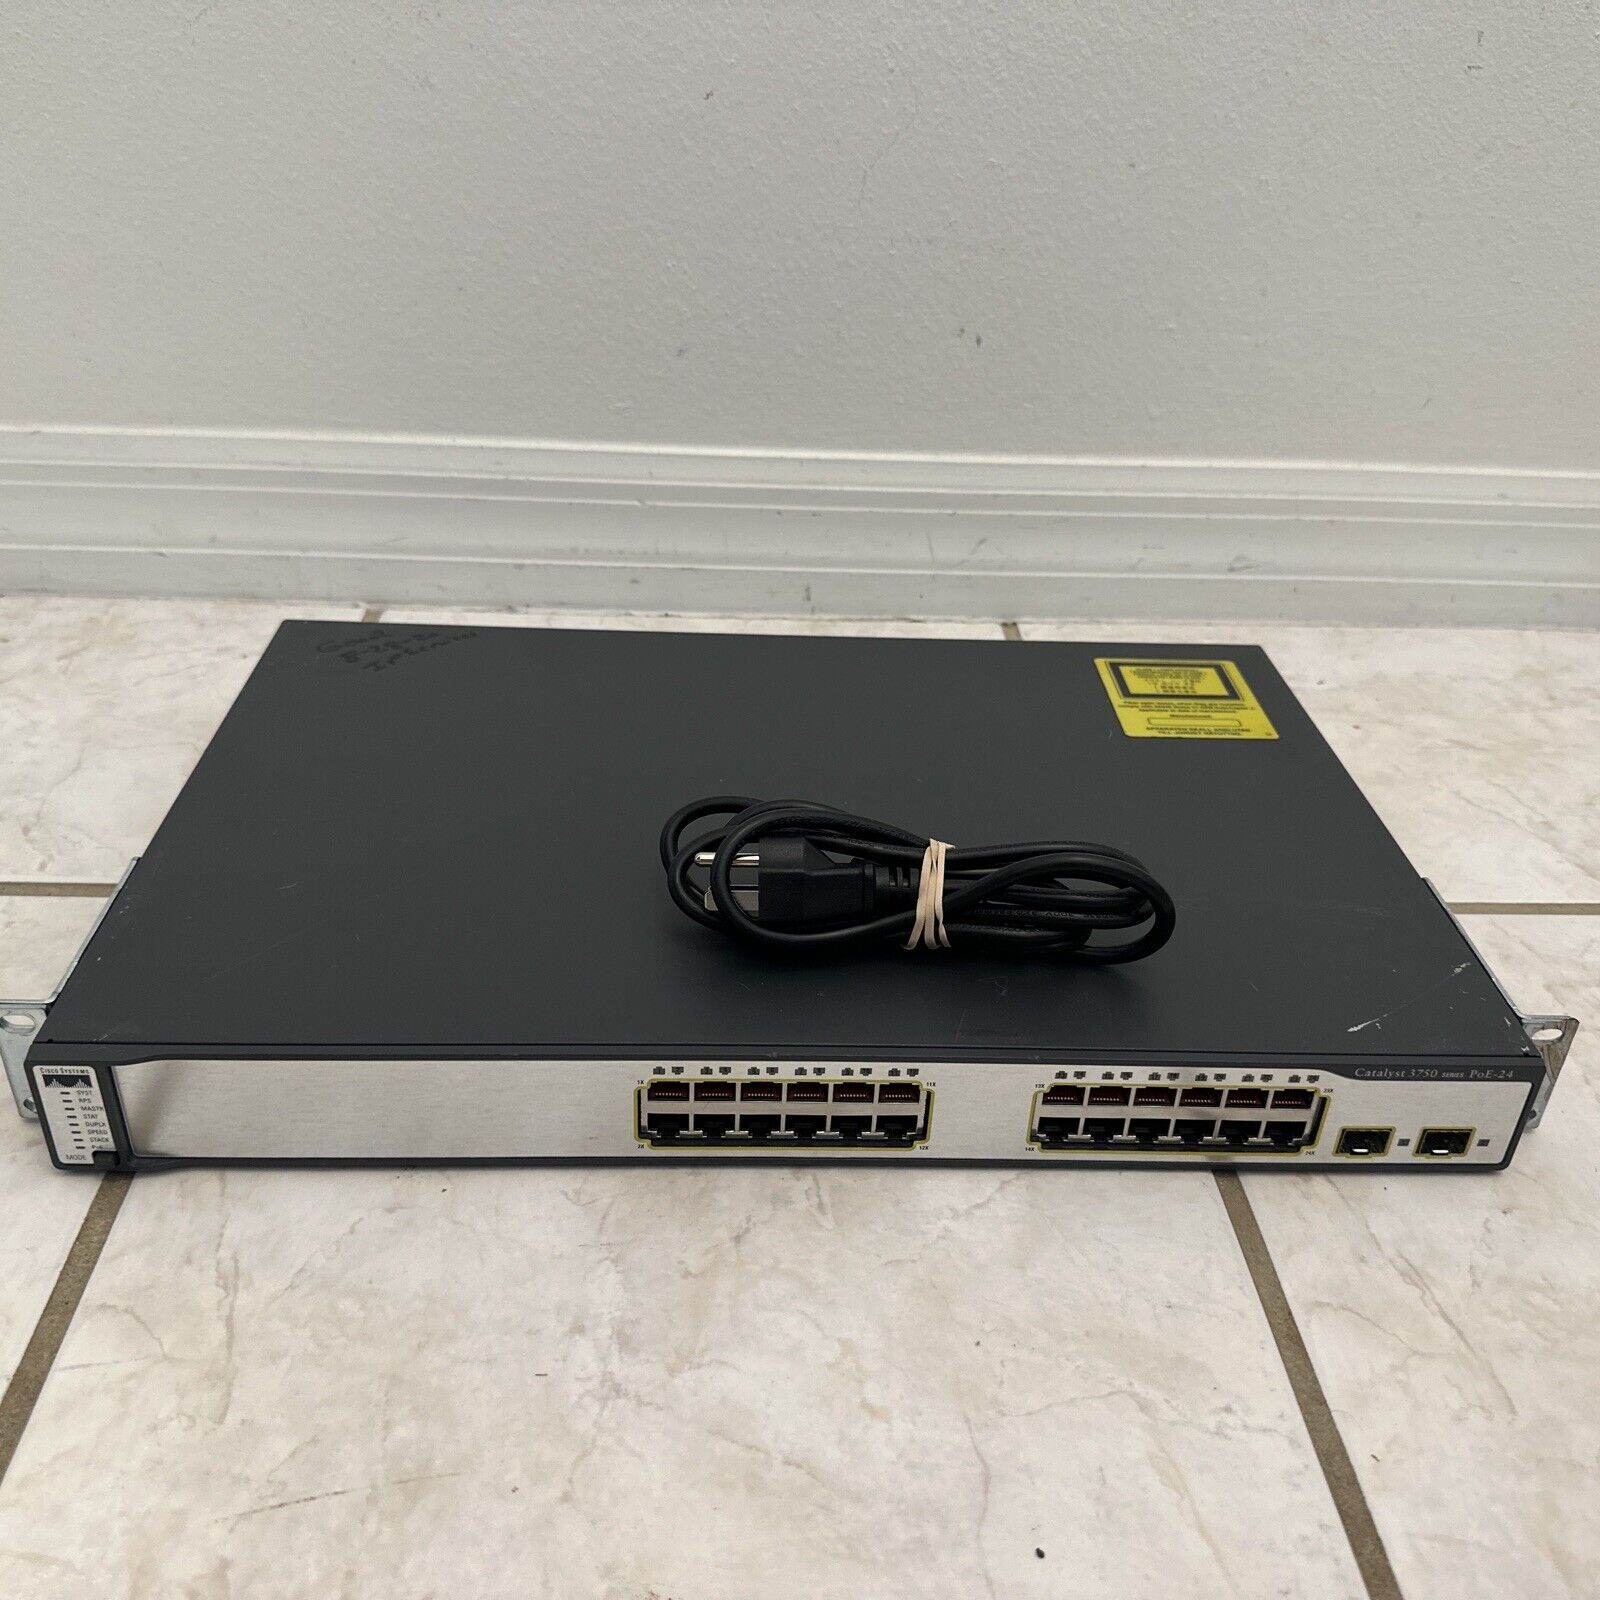 Genuine Cisco WS-C3750-24PS-S V04 Catalyst 3750 V4 24 Port POE Switch Tested